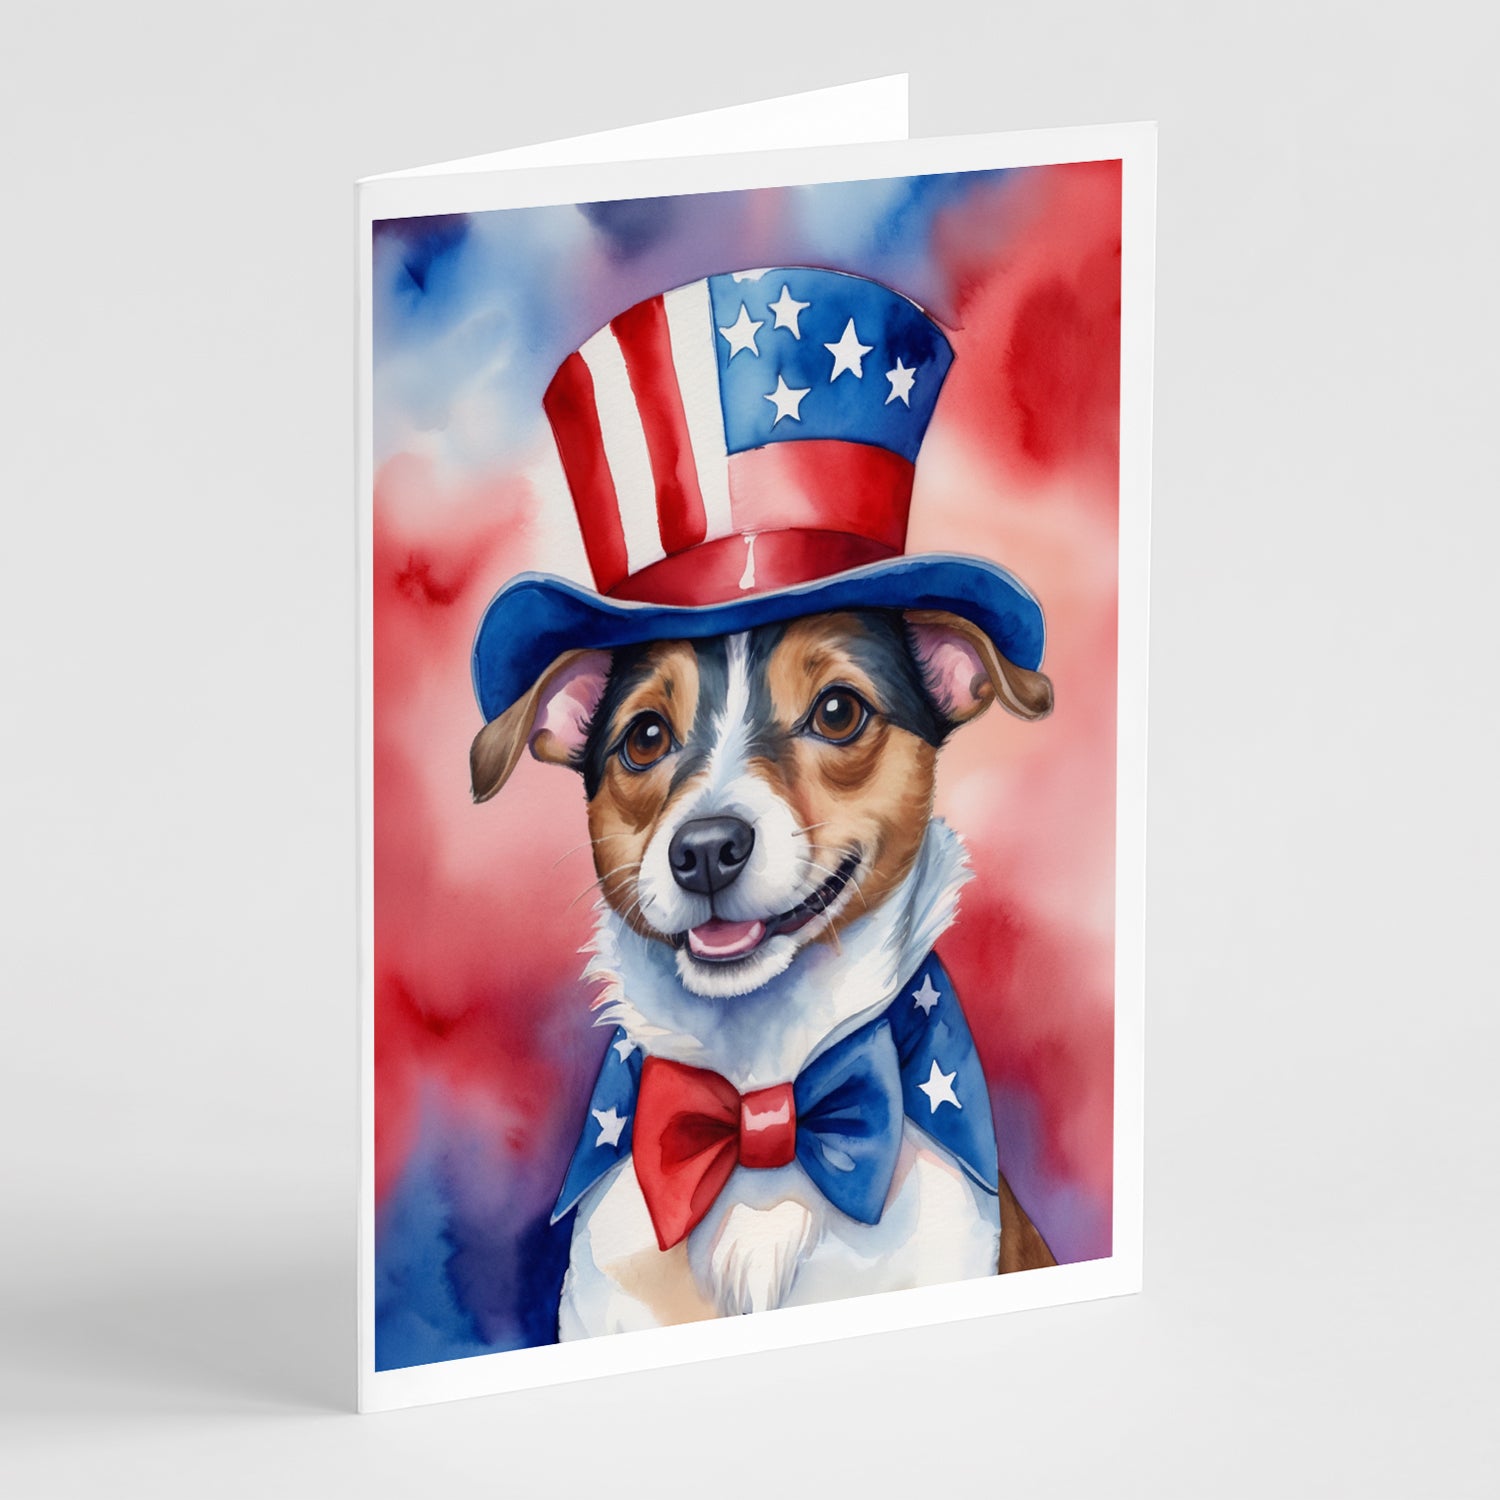 Buy this Jack Russell Terrier Patriotic American Greeting Cards Pack of 8